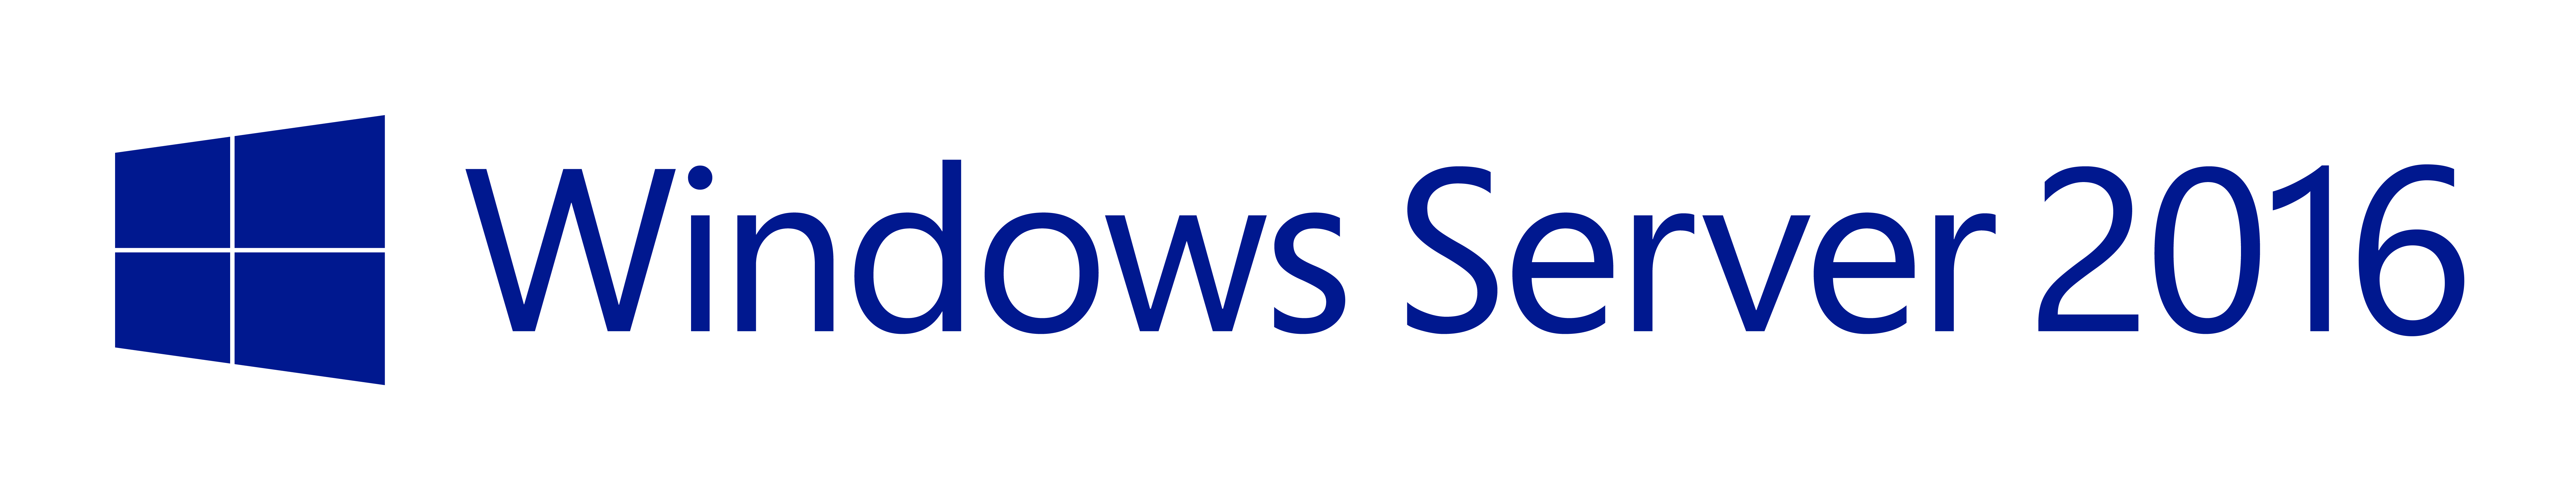 Windows Server Logo - Windows Server 2016.png